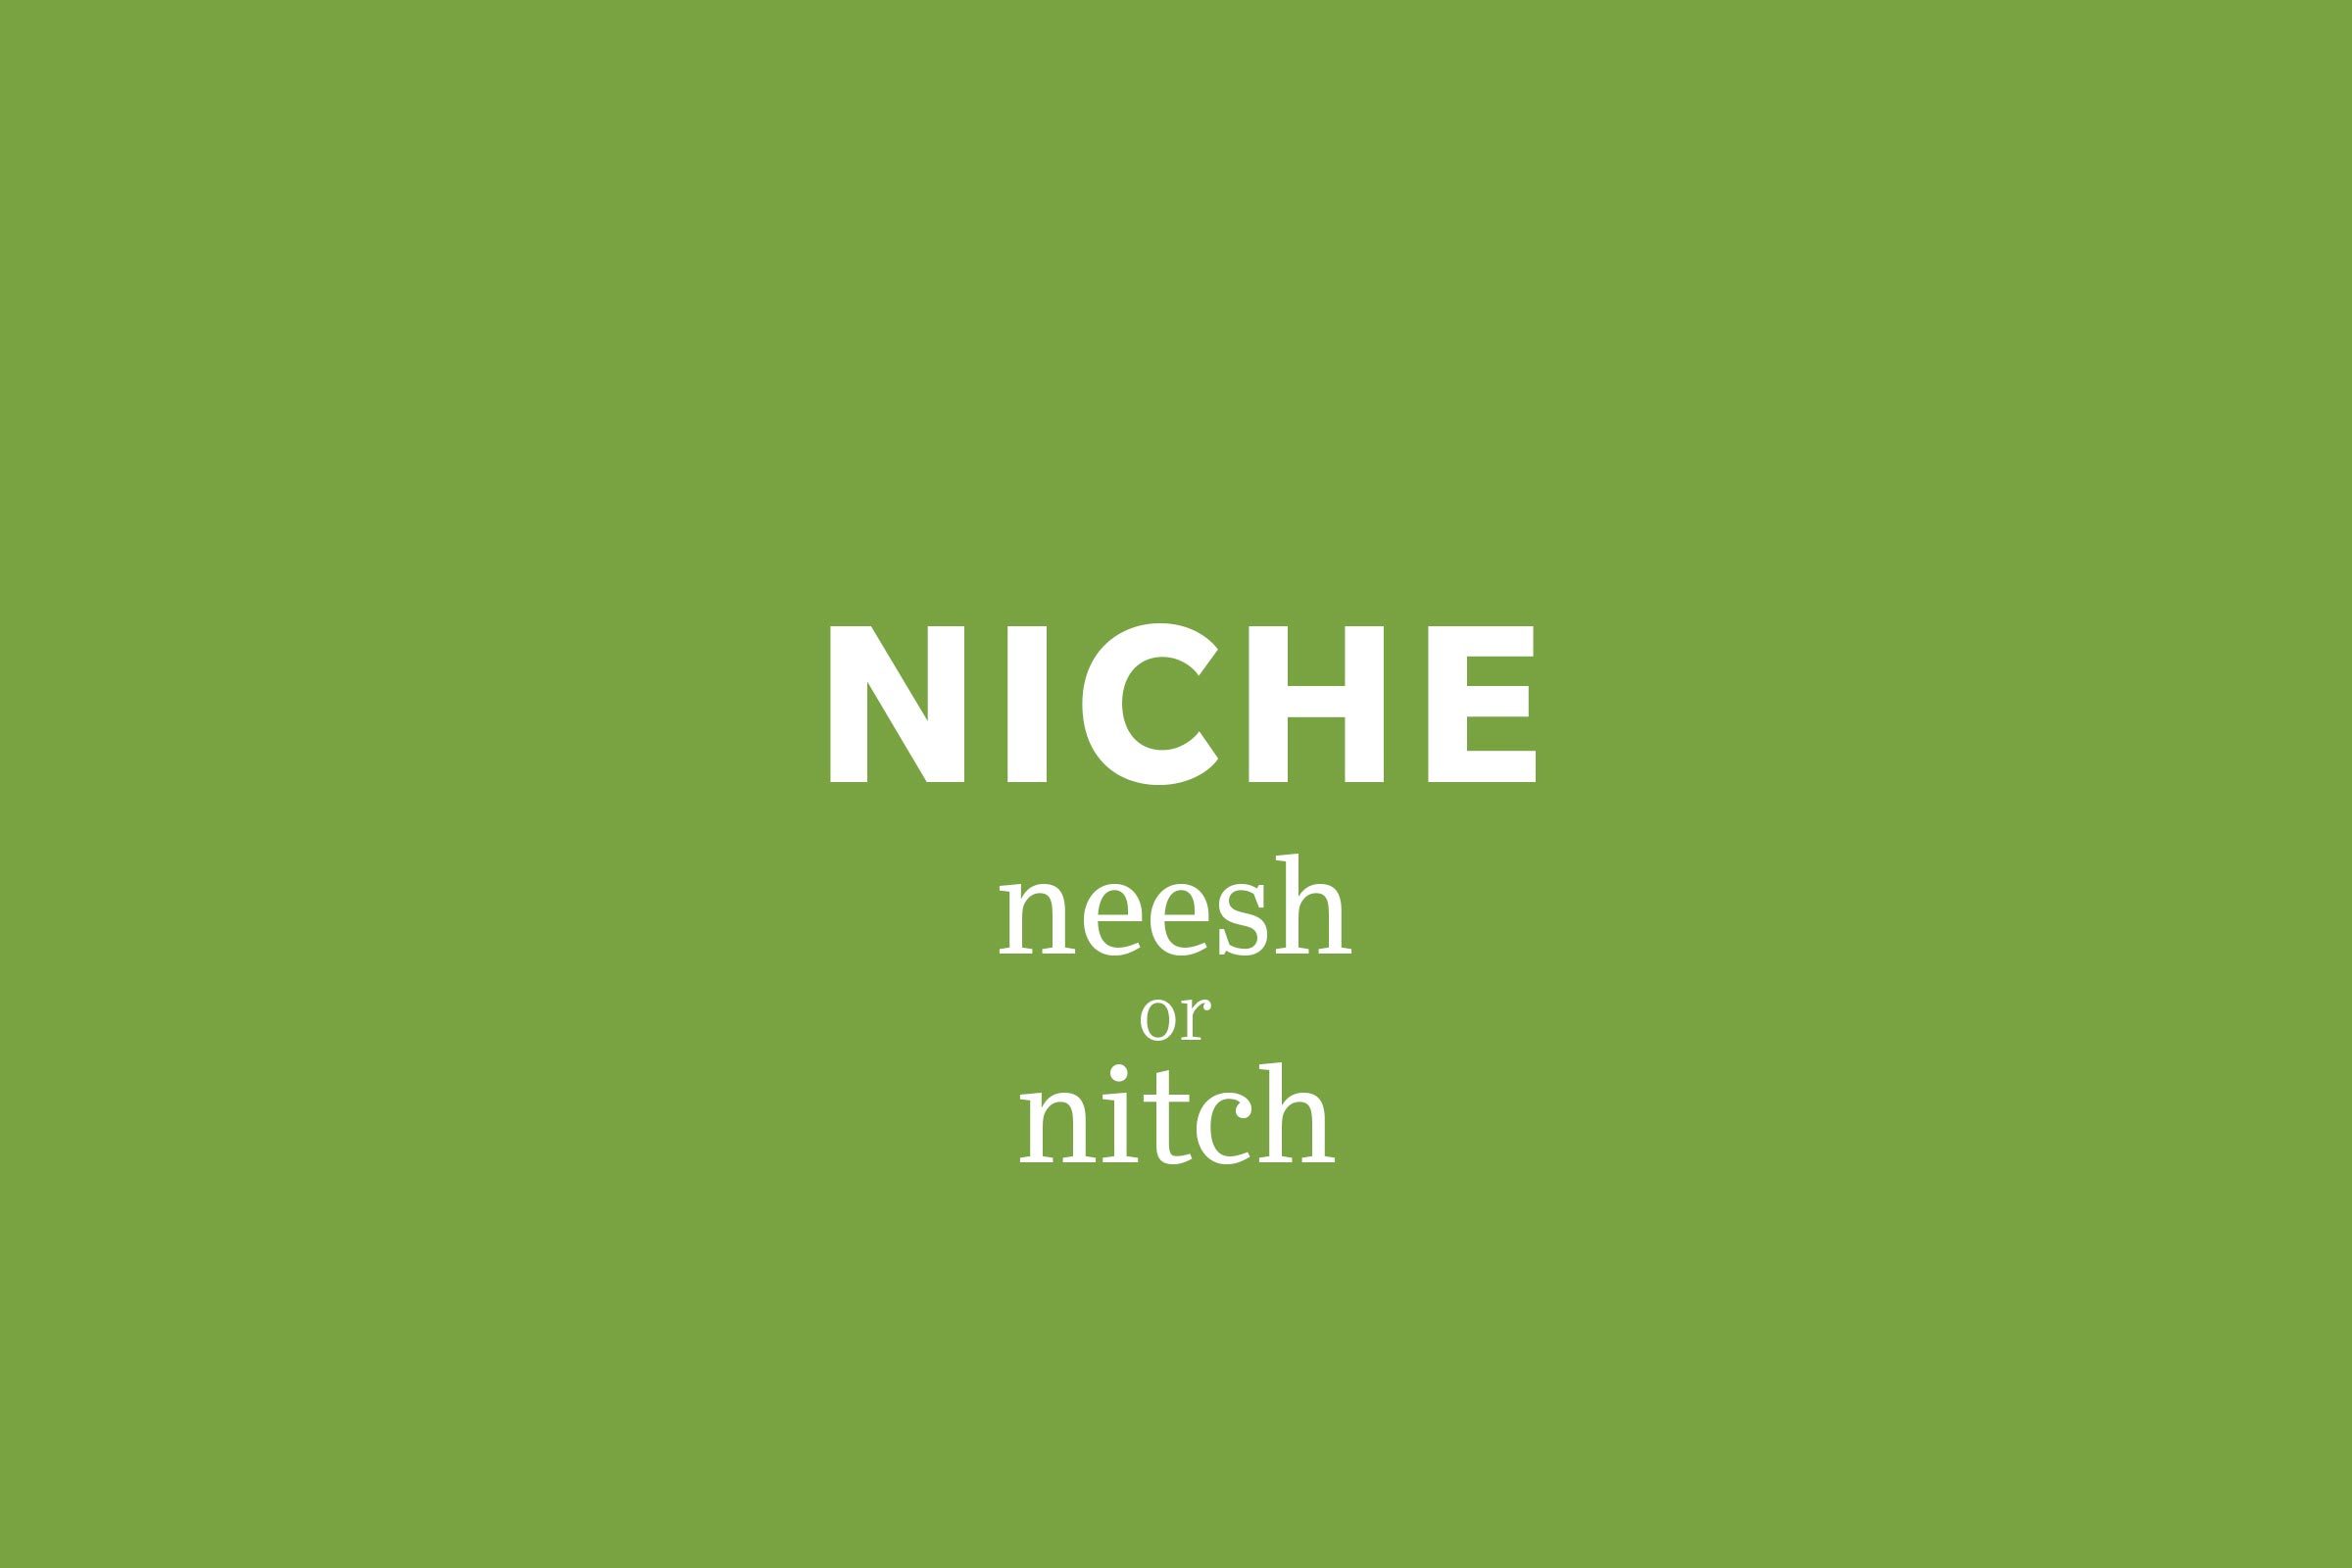 niche pronunciation